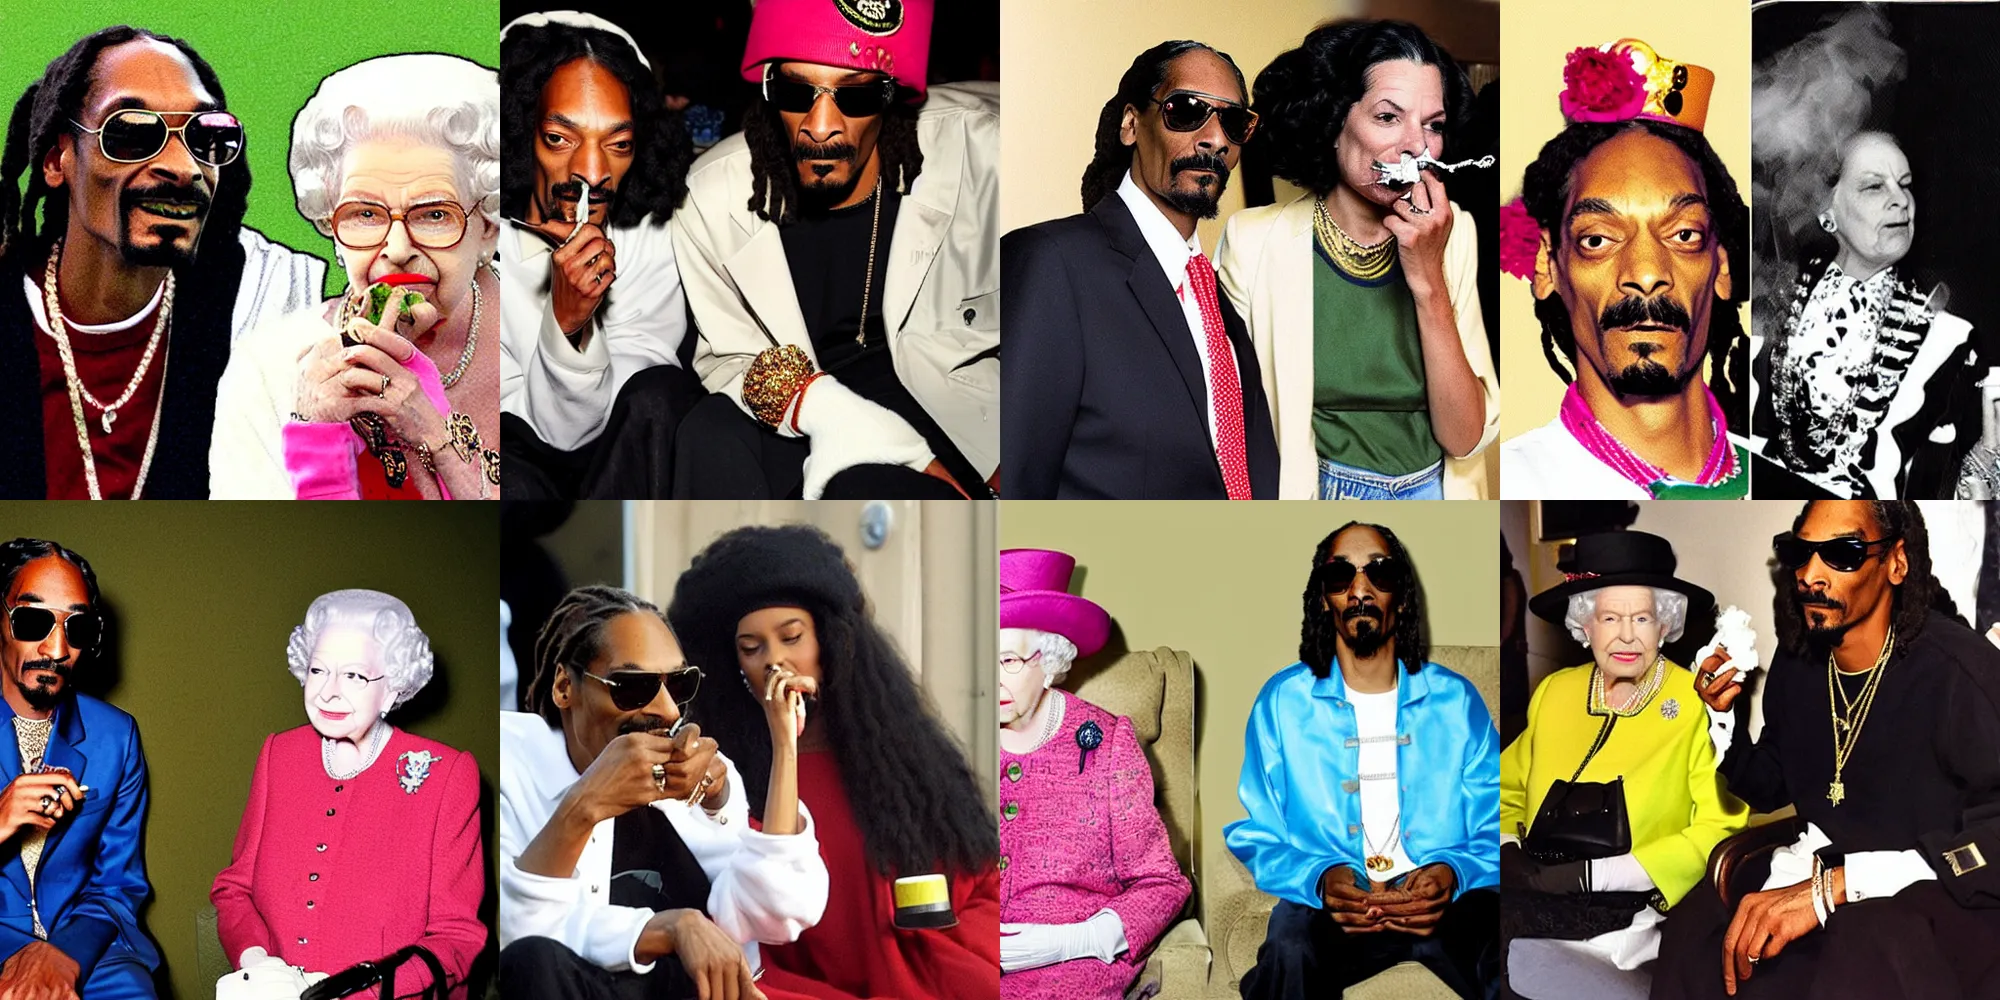 Prompt: Snoop Dogg and Queen Elizabeth smoking weed